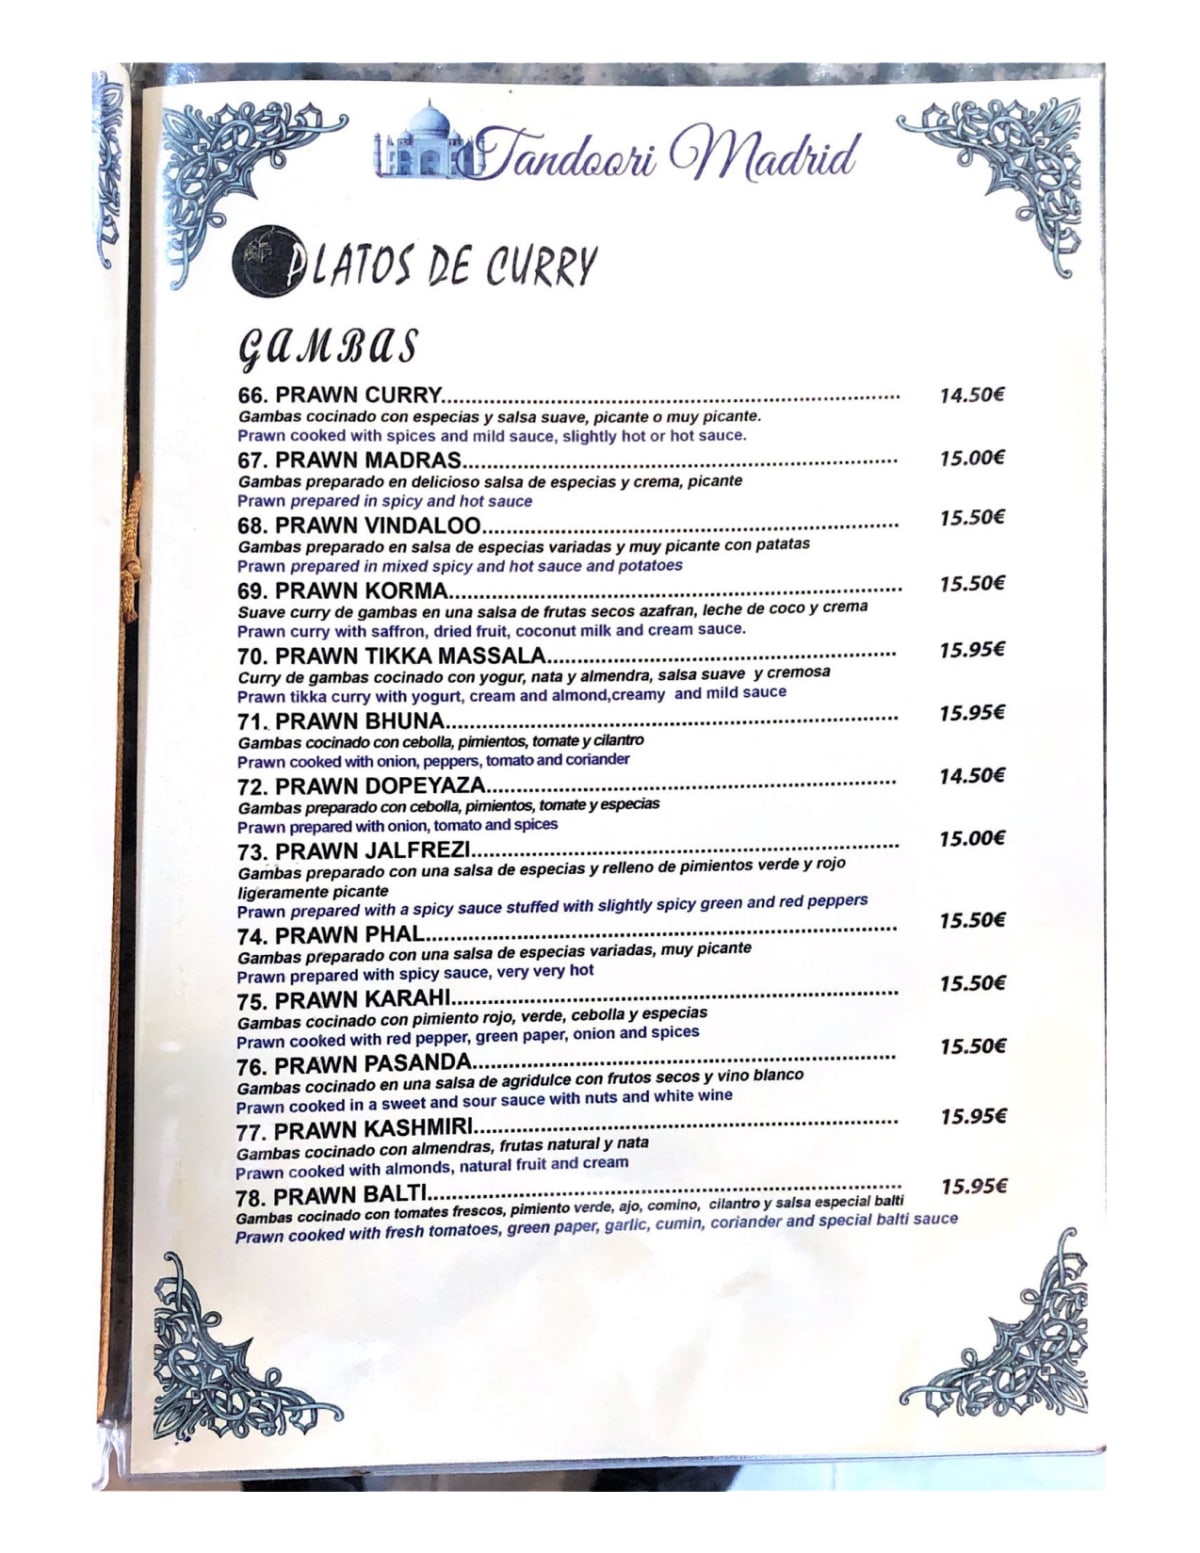 Tandoori Madrid menu